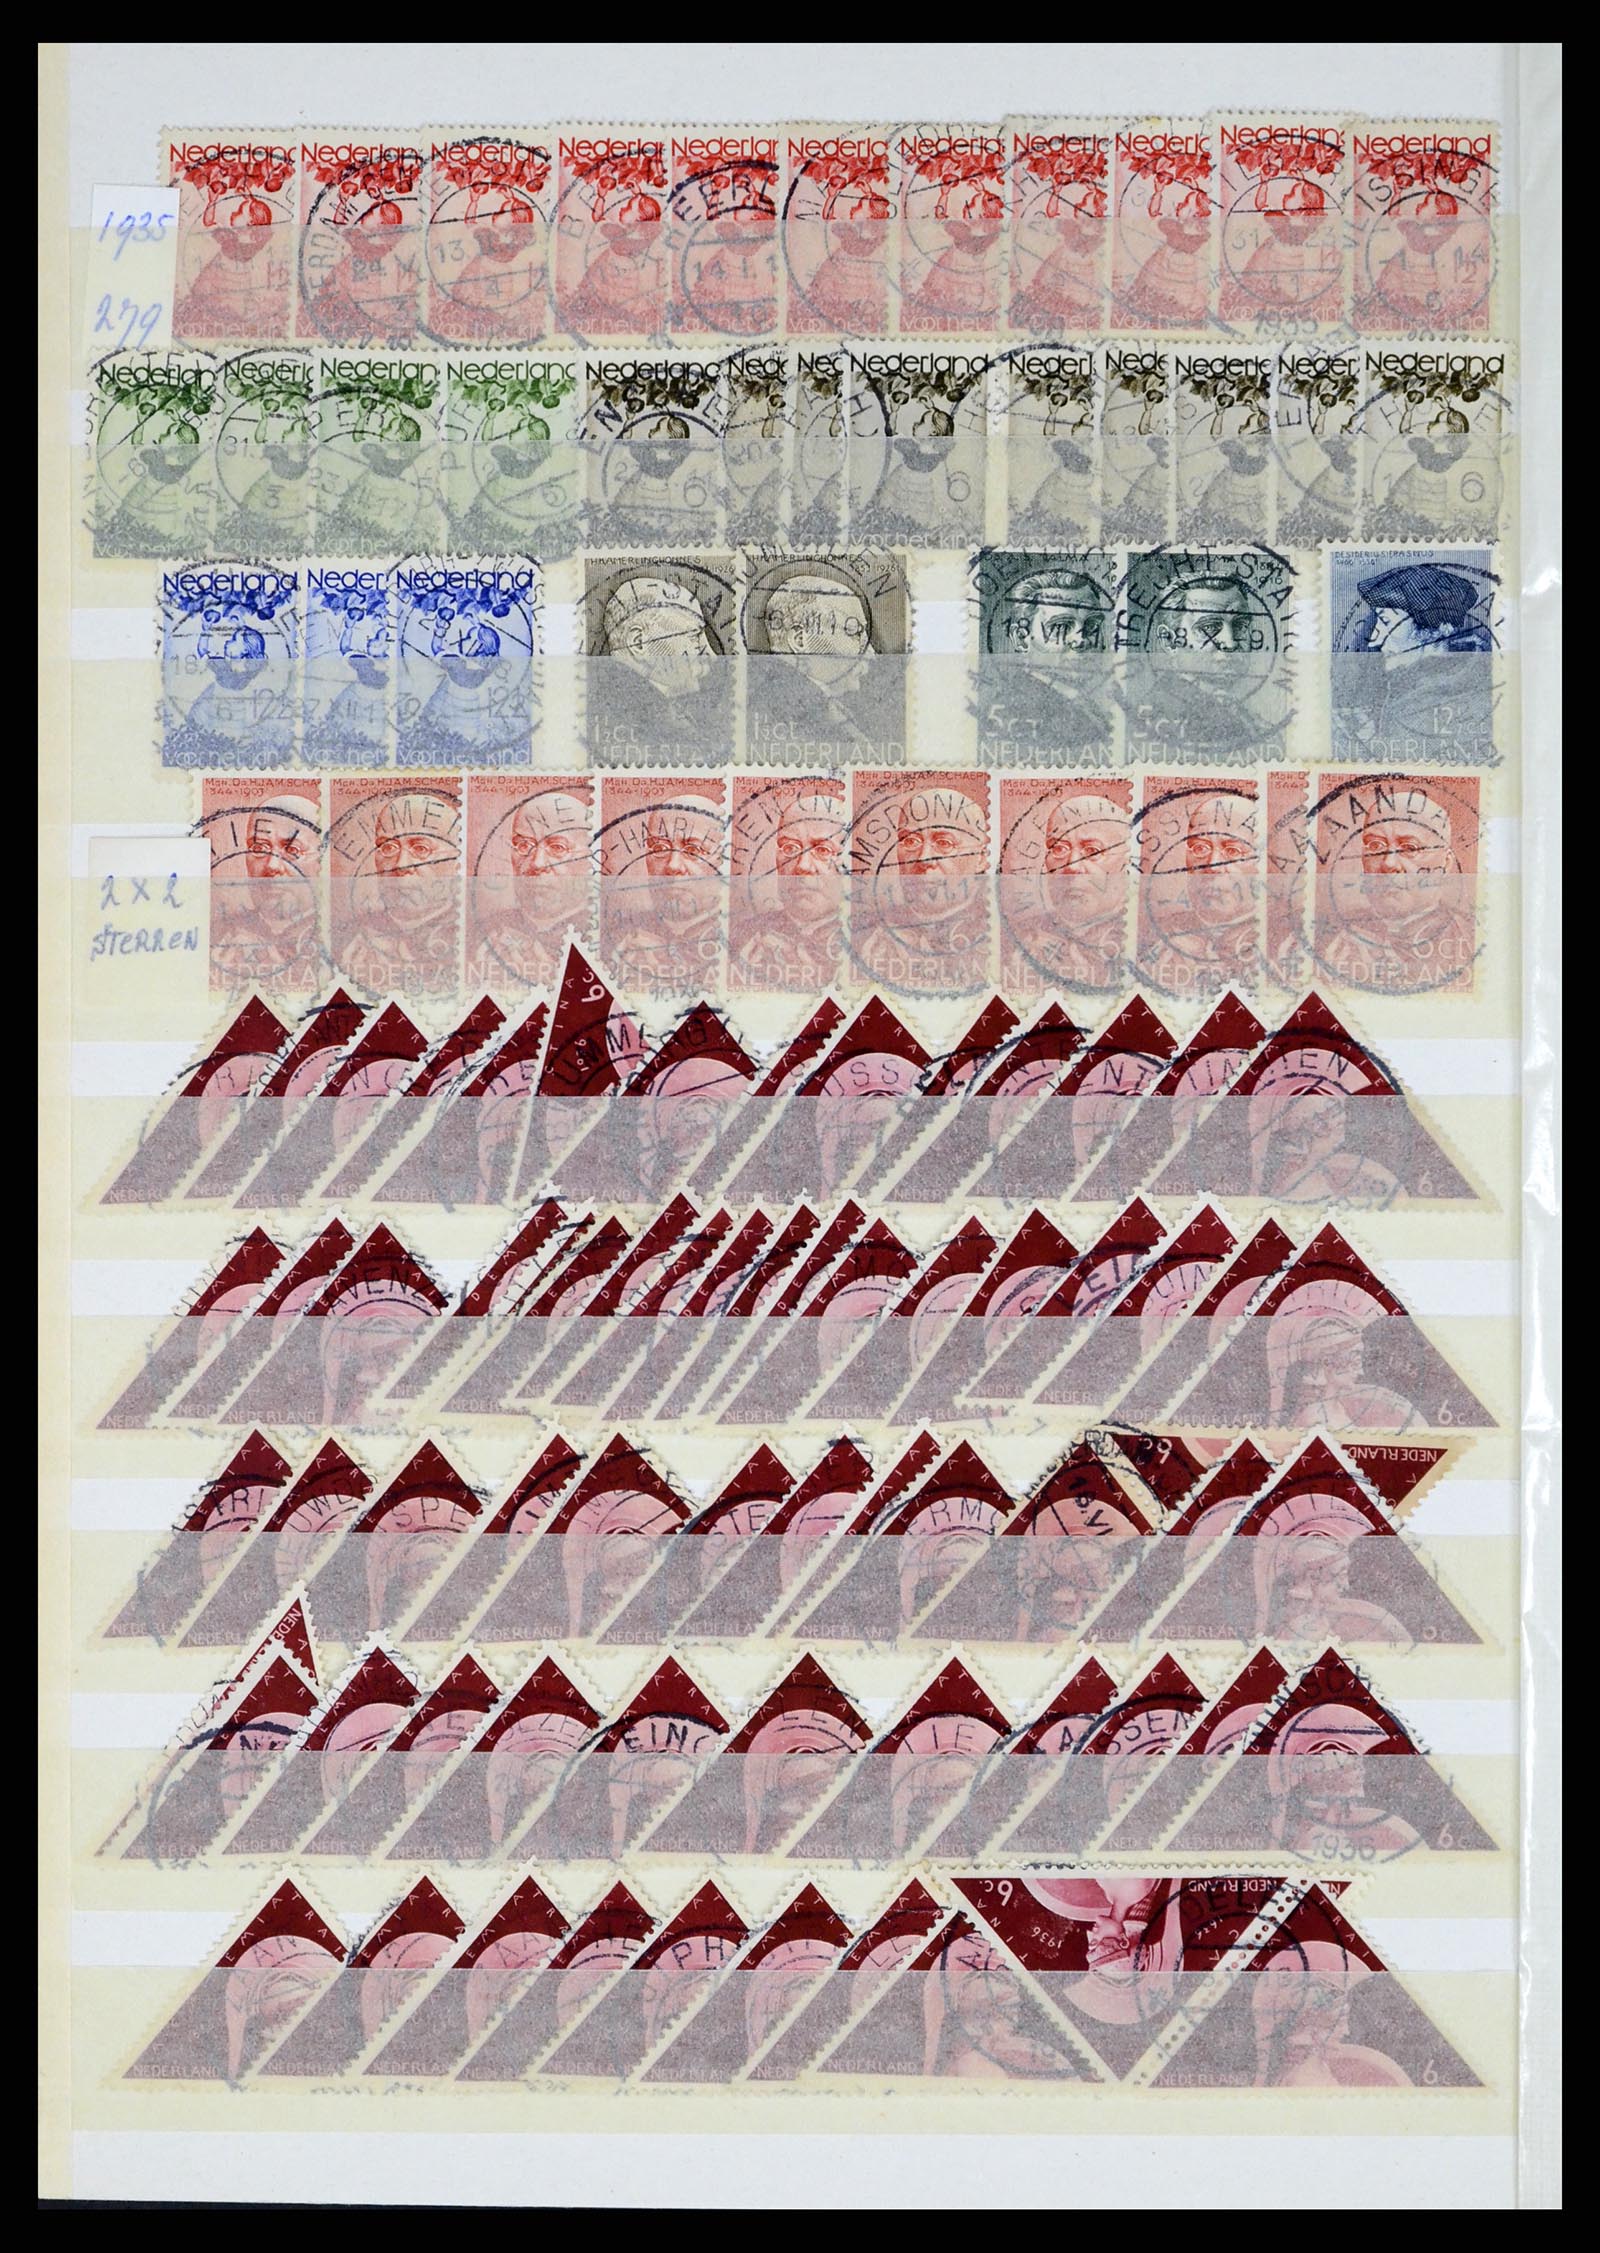 37424 020 - Stamp collection 37424 Netherlands shortbar cancels.